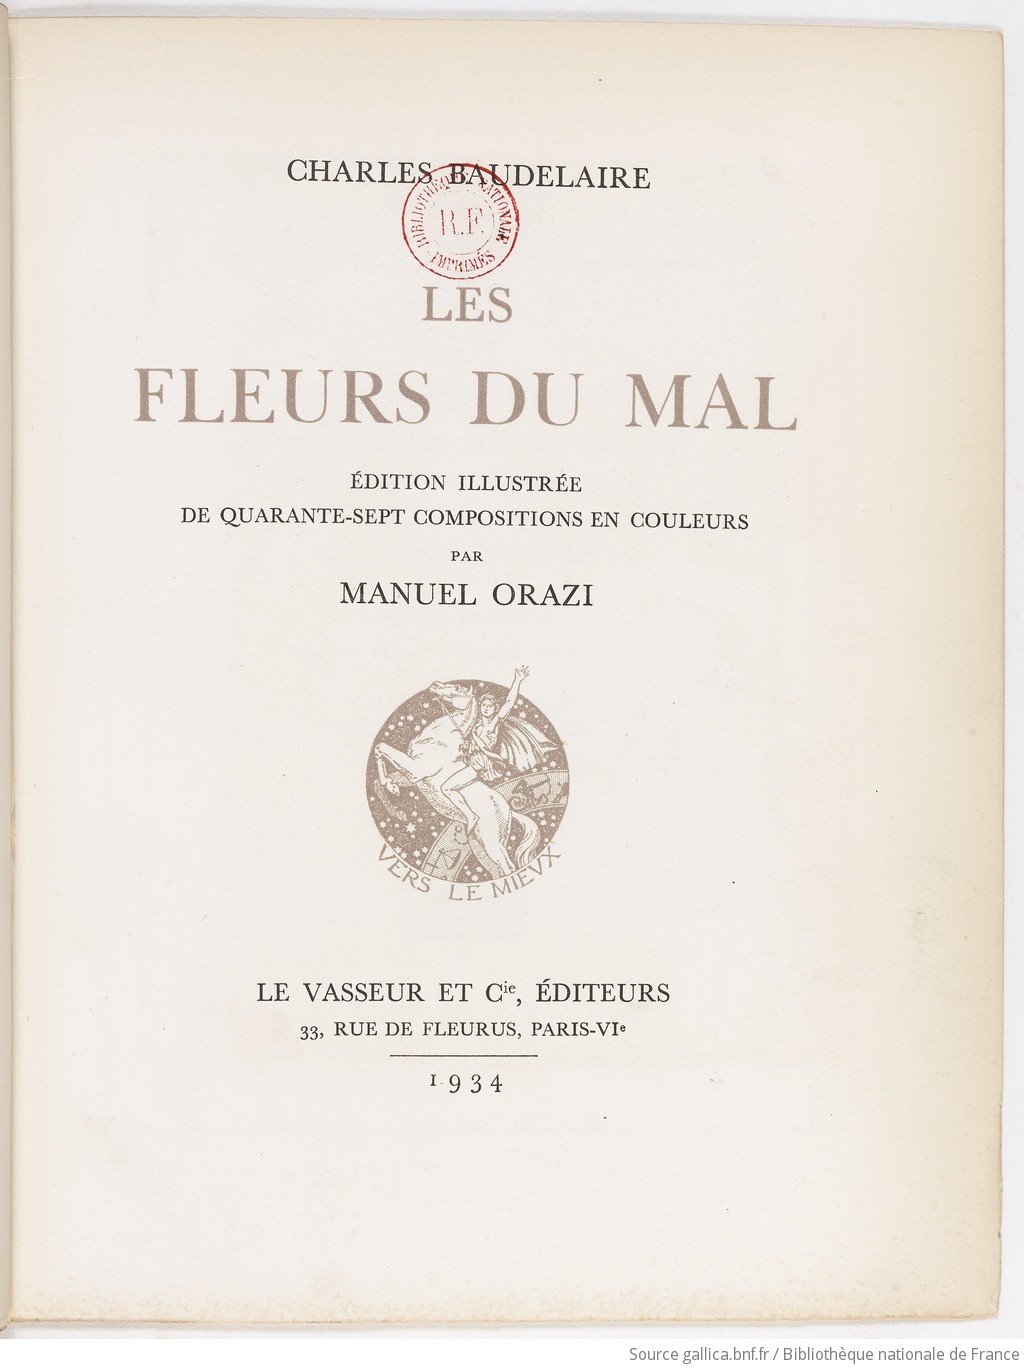 Les Fleurs du Mal by Charles Baudelaire